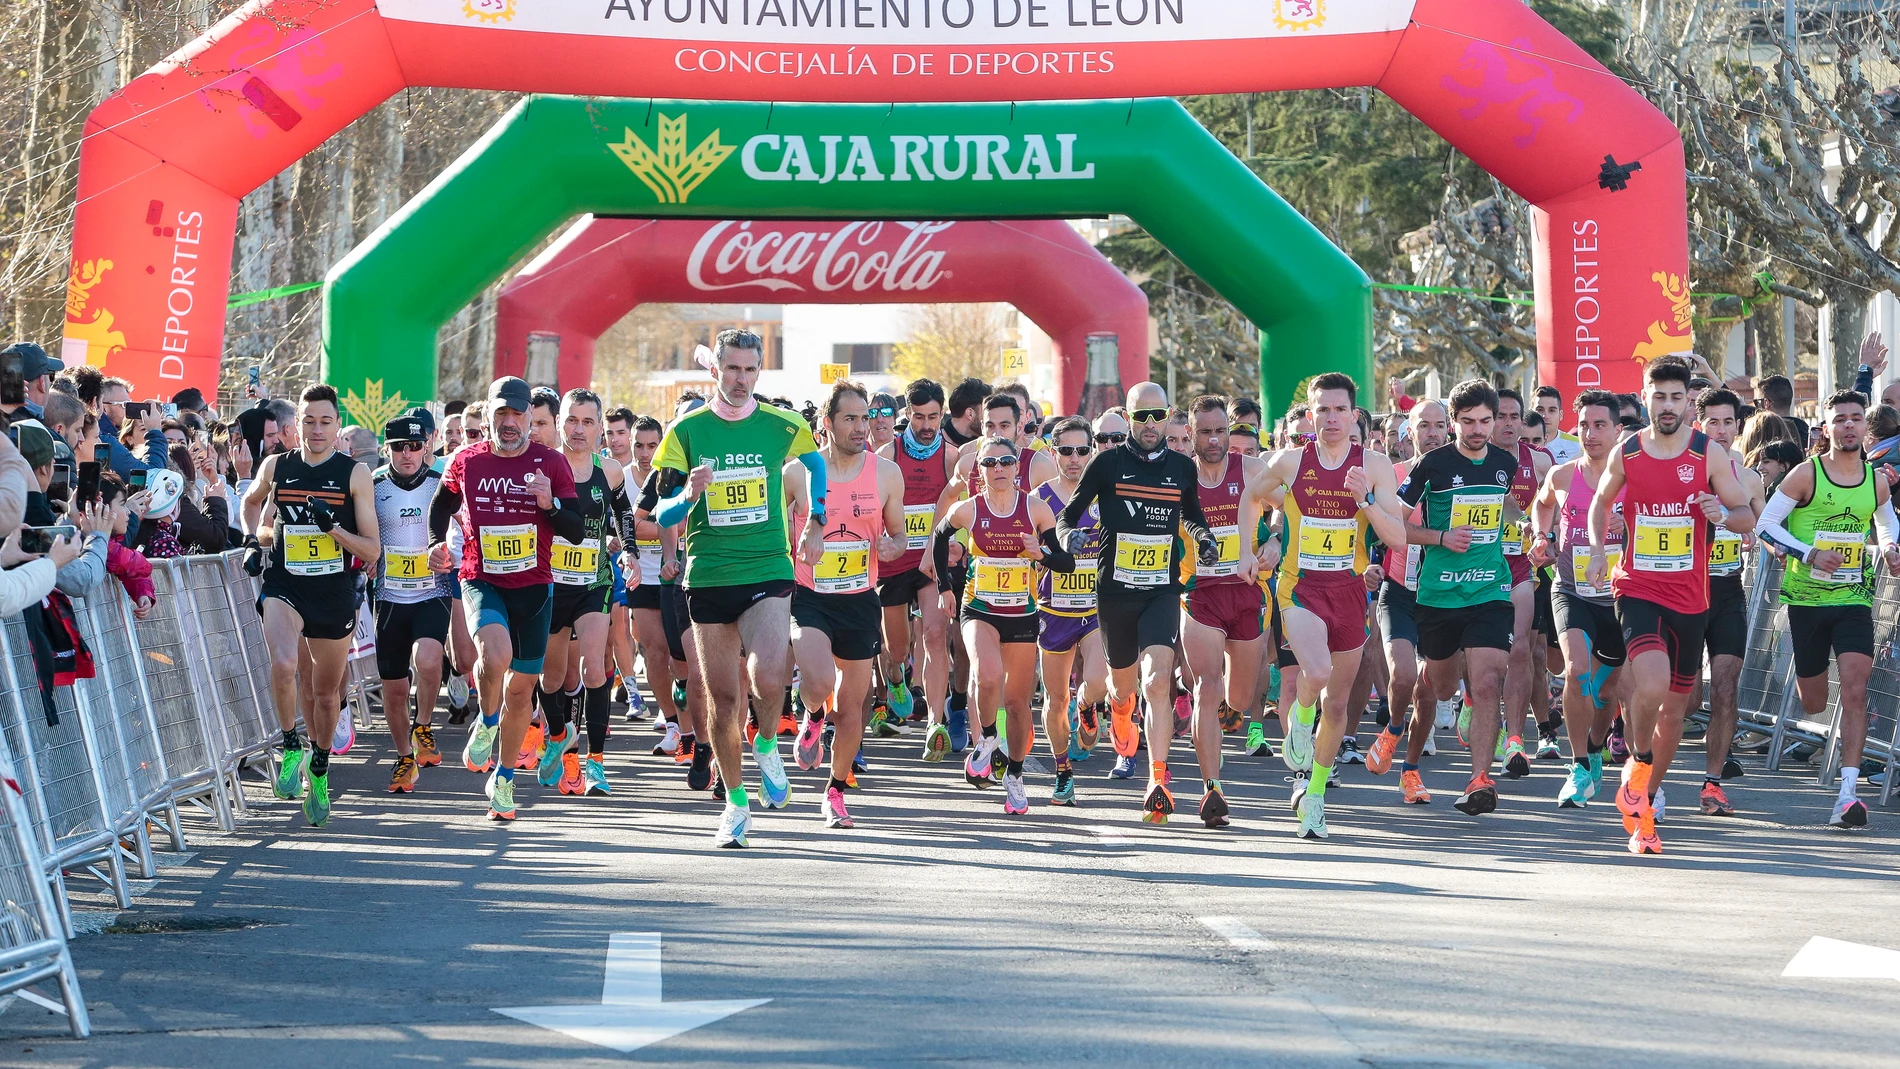 XIII Media Maratón de León